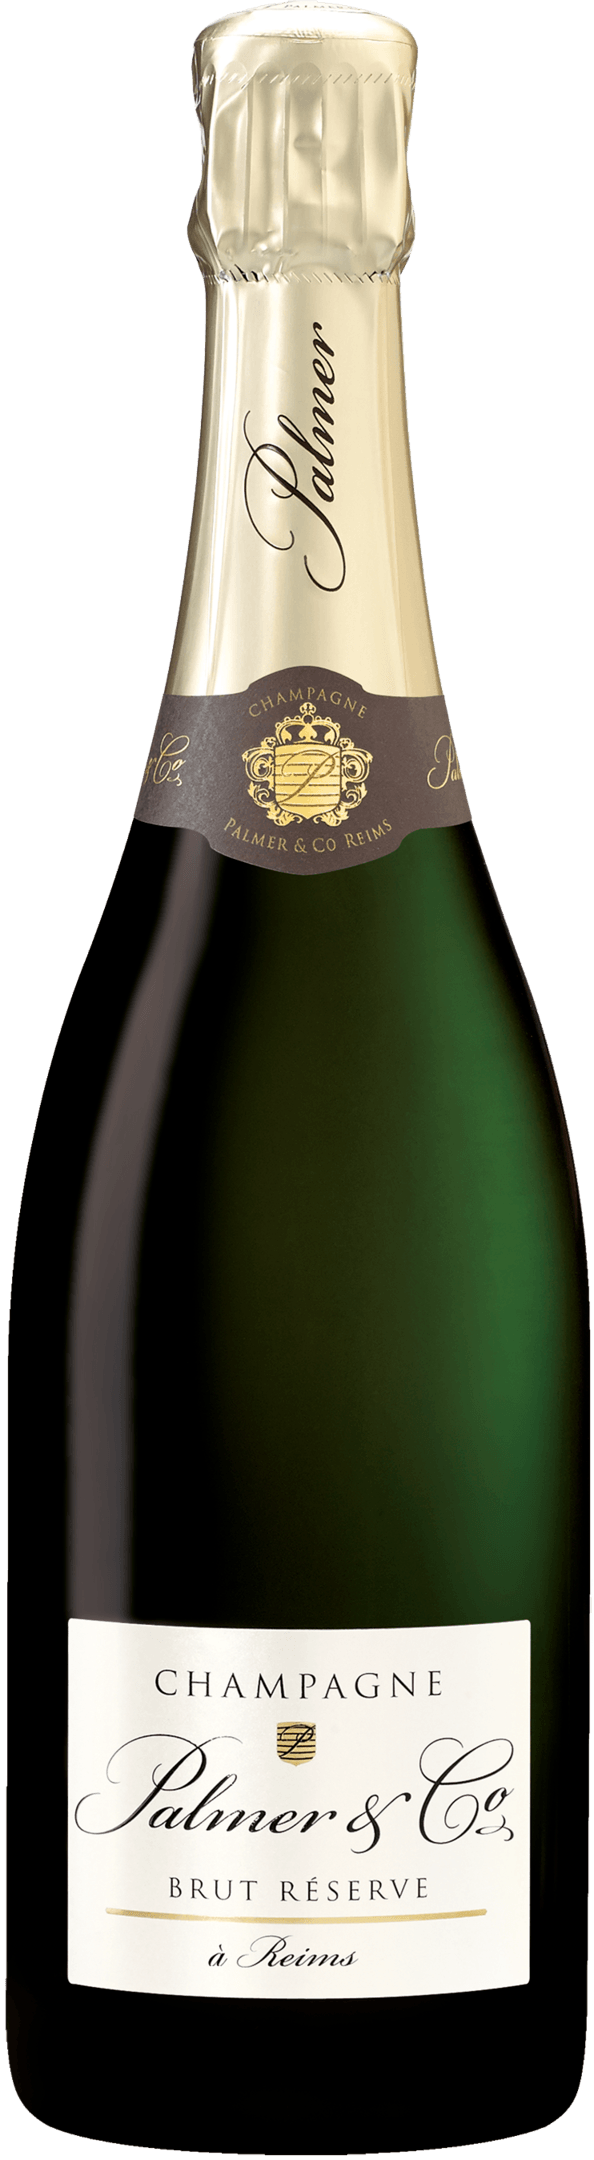 Champagne Palmer & Co. Brut Reserve, Reims